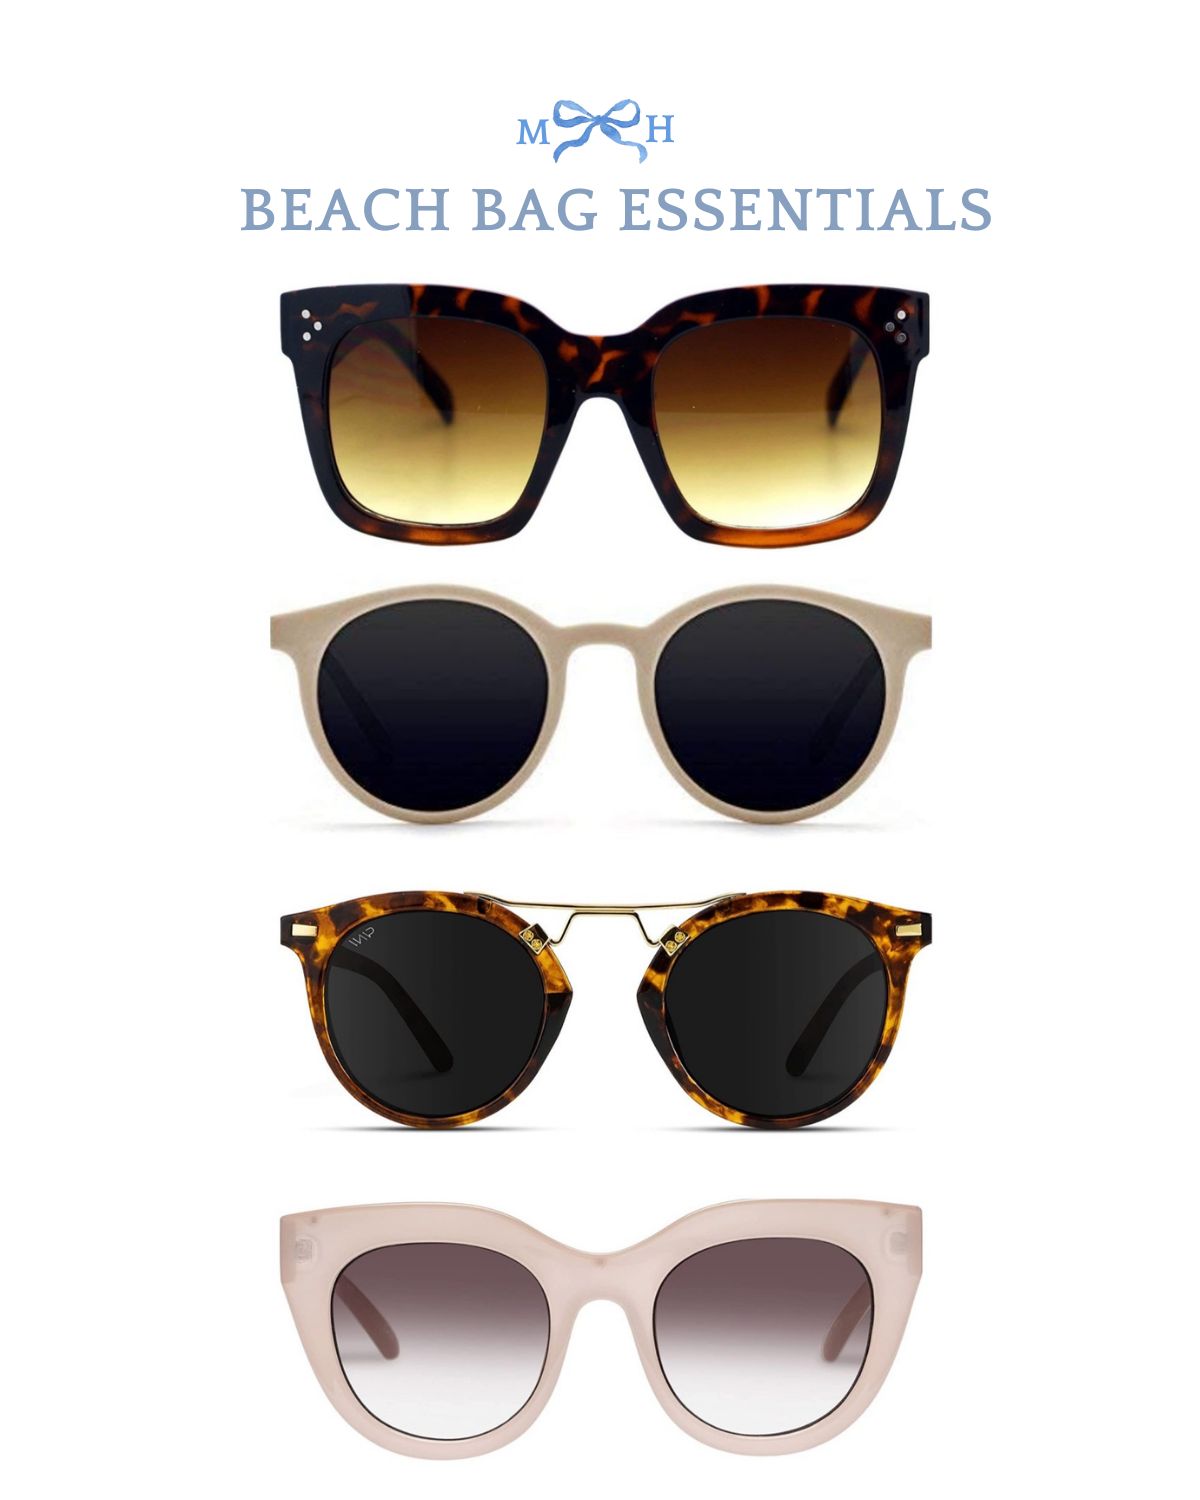 women's sunglasses fashion style resort spring break summer vacation classic preppy beach pool day m | Amazon (US)